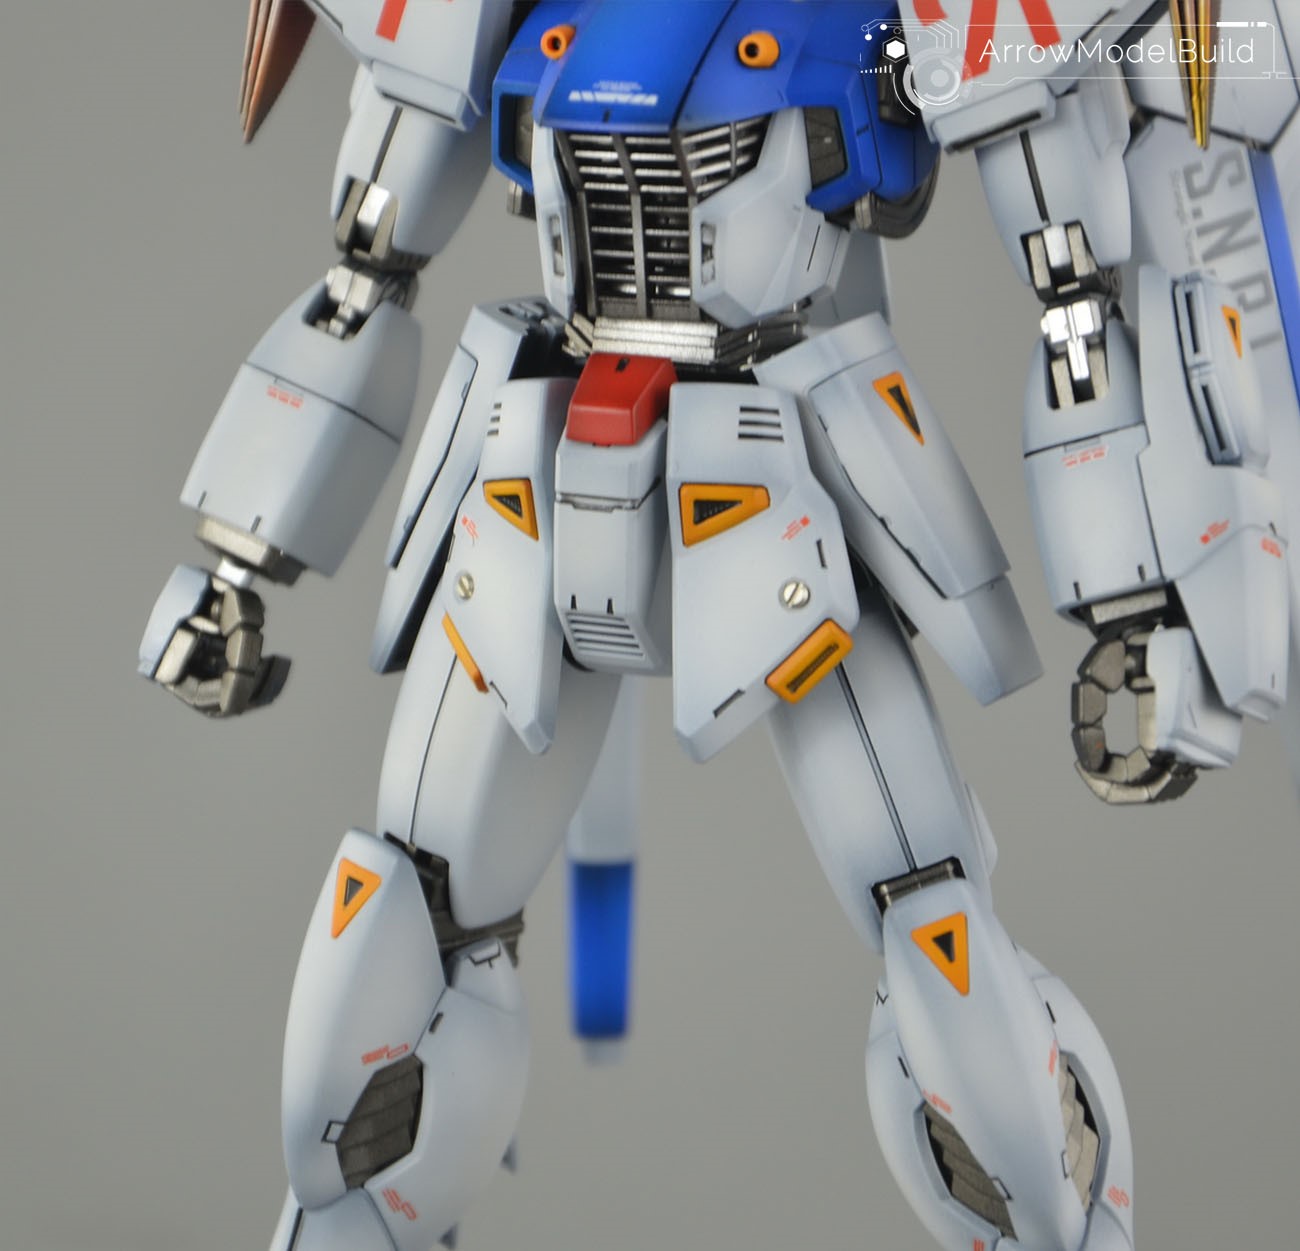 Mobile Suit Gundam F91 MG F91 Gundam F91 (Ver 2.0) 1/100 Scale Model Kit